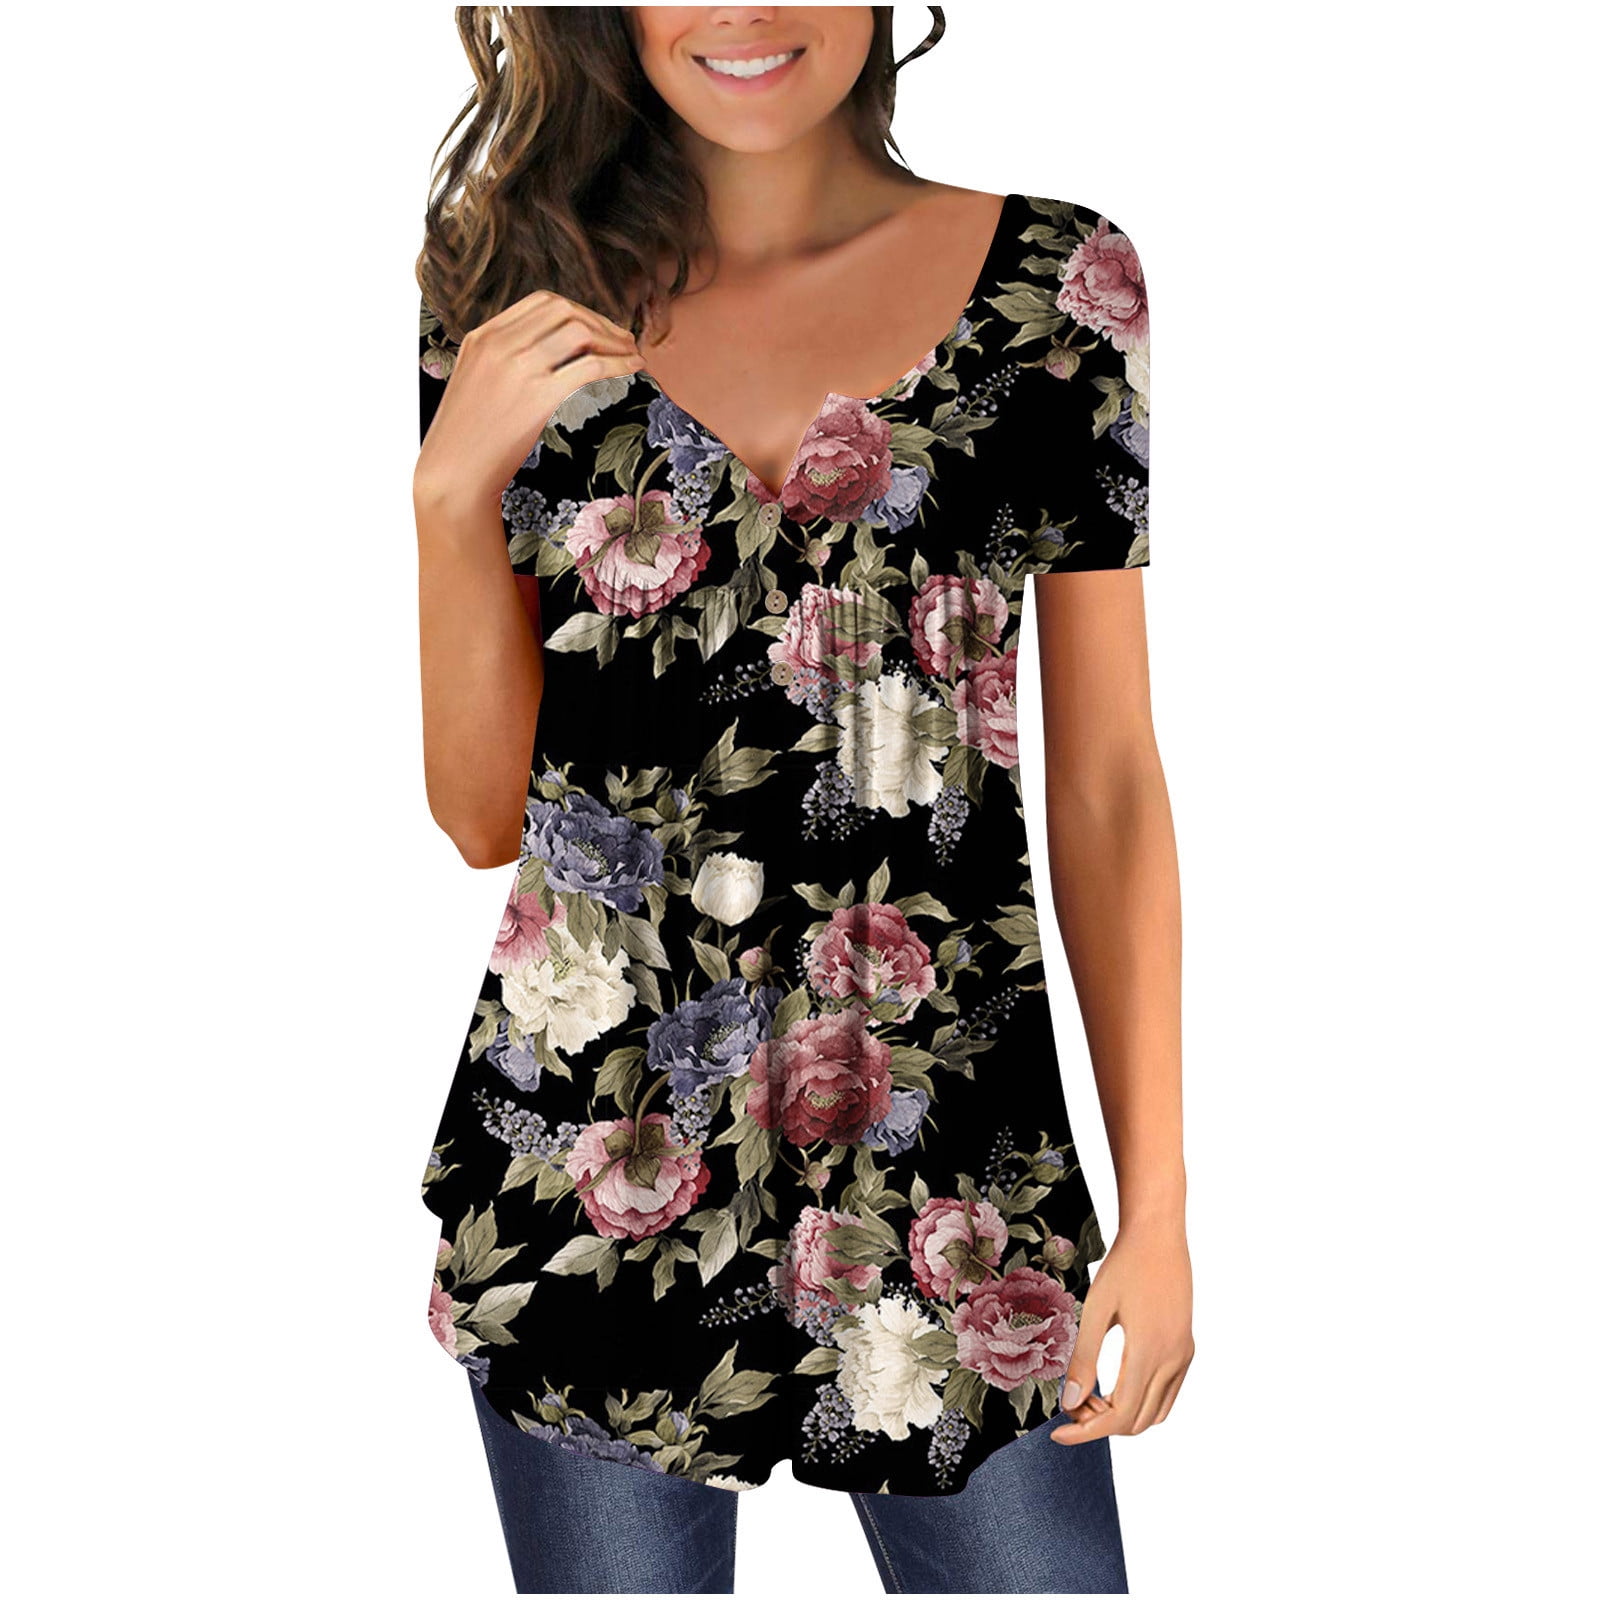 Fatuov Womens Plus Size Tops Summer Short Sleeve Floral Print Buttons ...